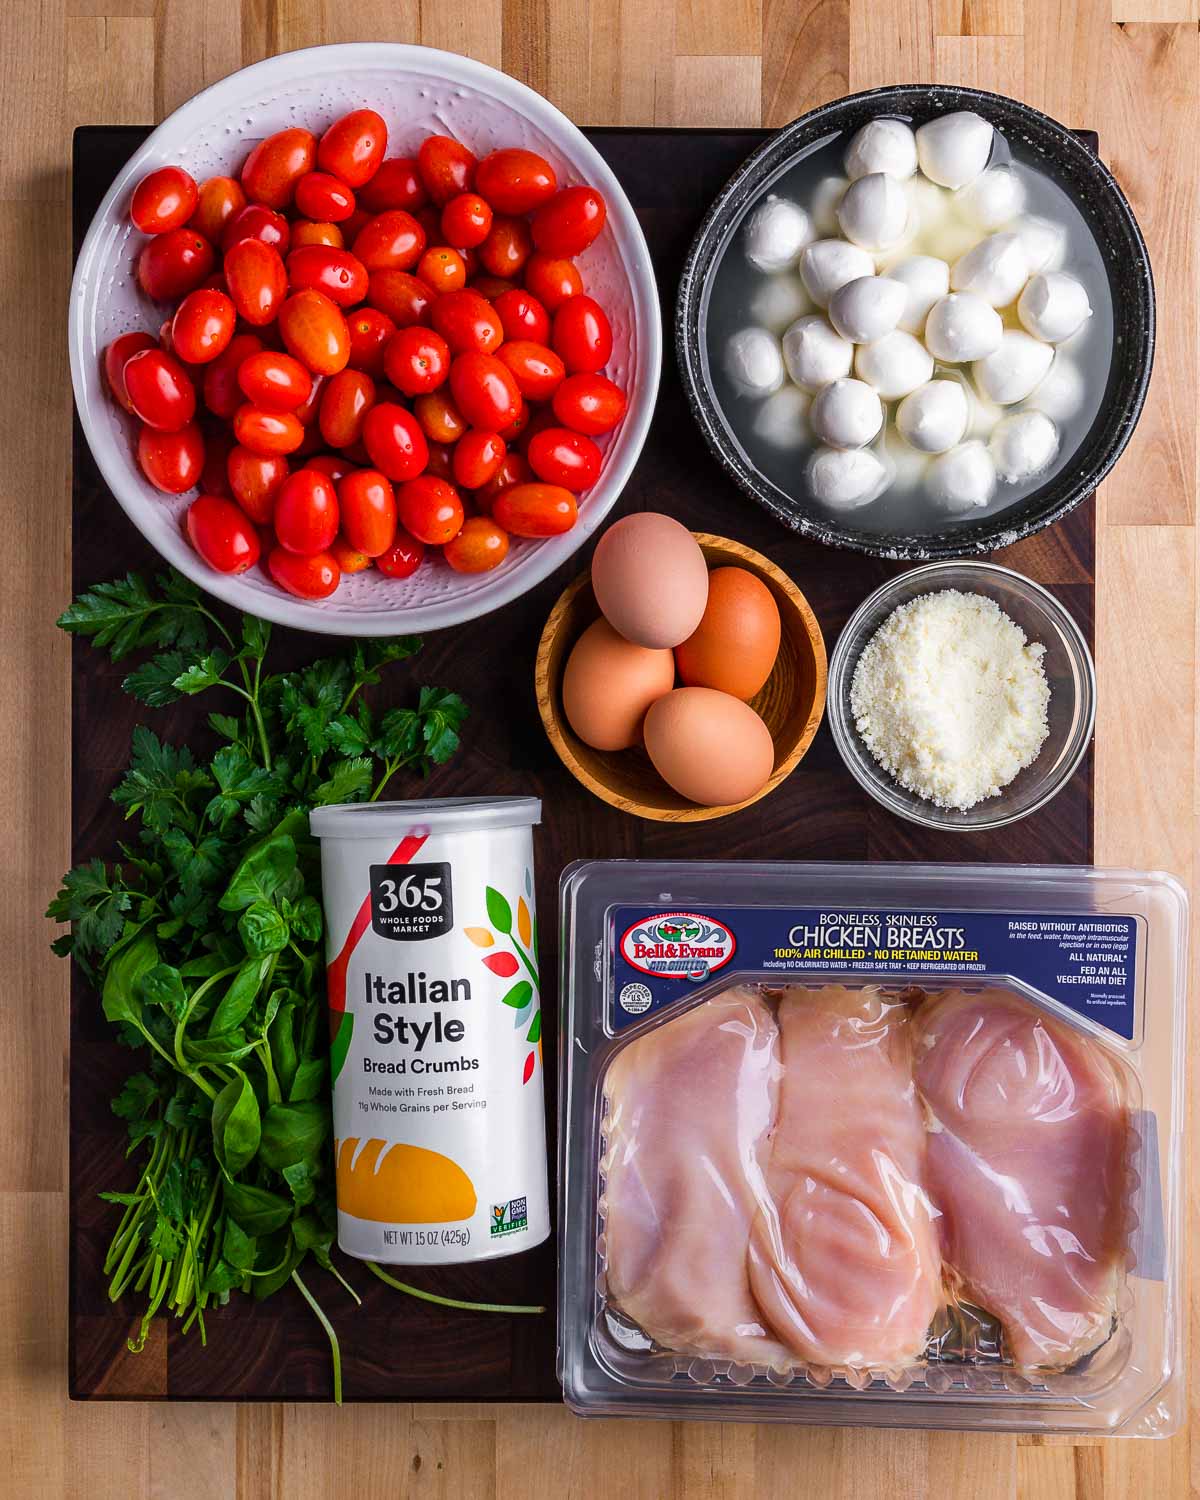 Ingredients shown: cherry tomatoes, mozzarella balls, parsley, breadcrumbs, eggs, Pecorino, and chicken cutlets.